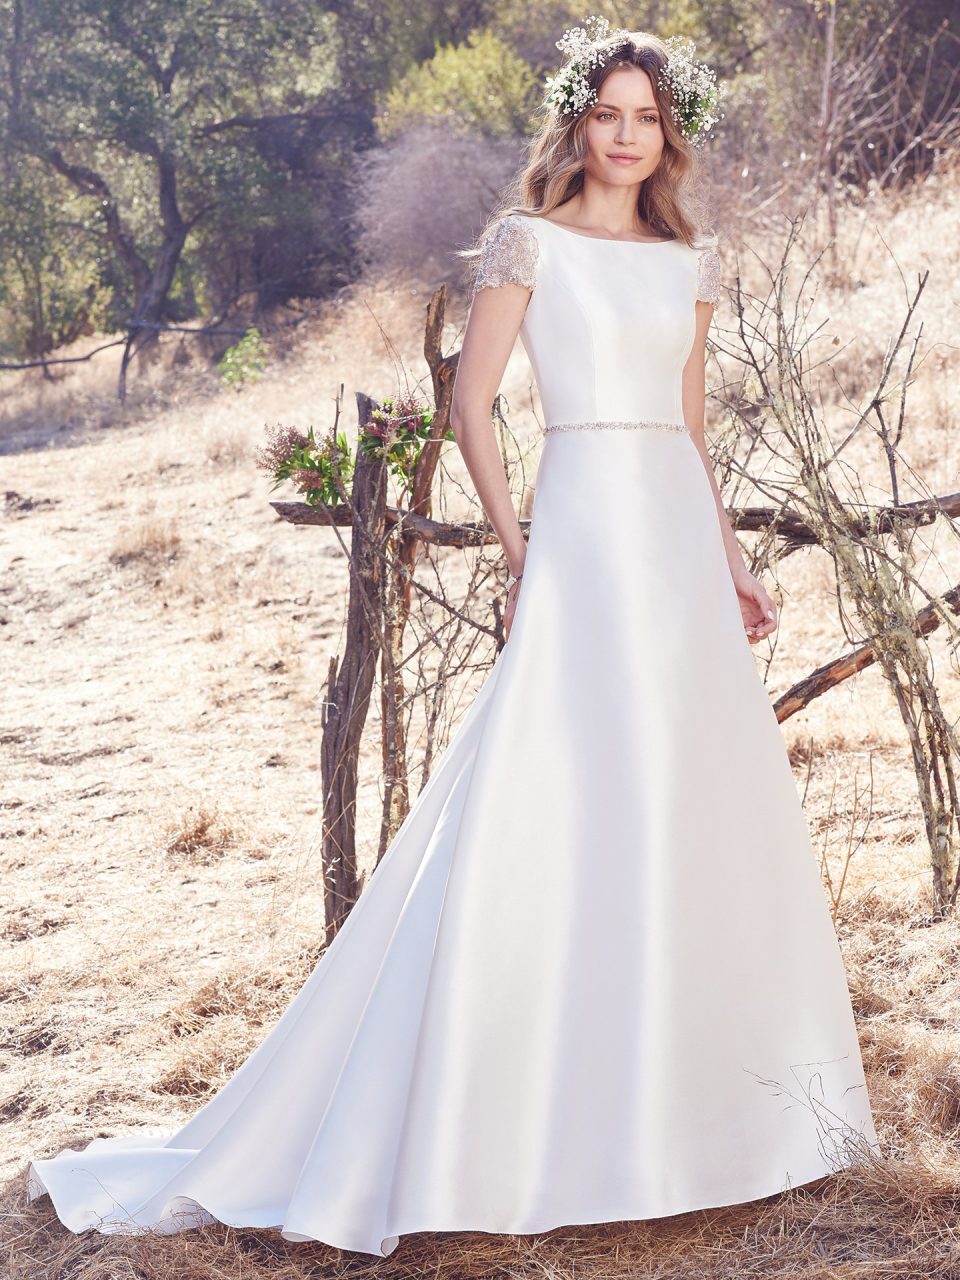 21 Exquisite Wedding Dresses with Cap Sleeves | weddingsonline